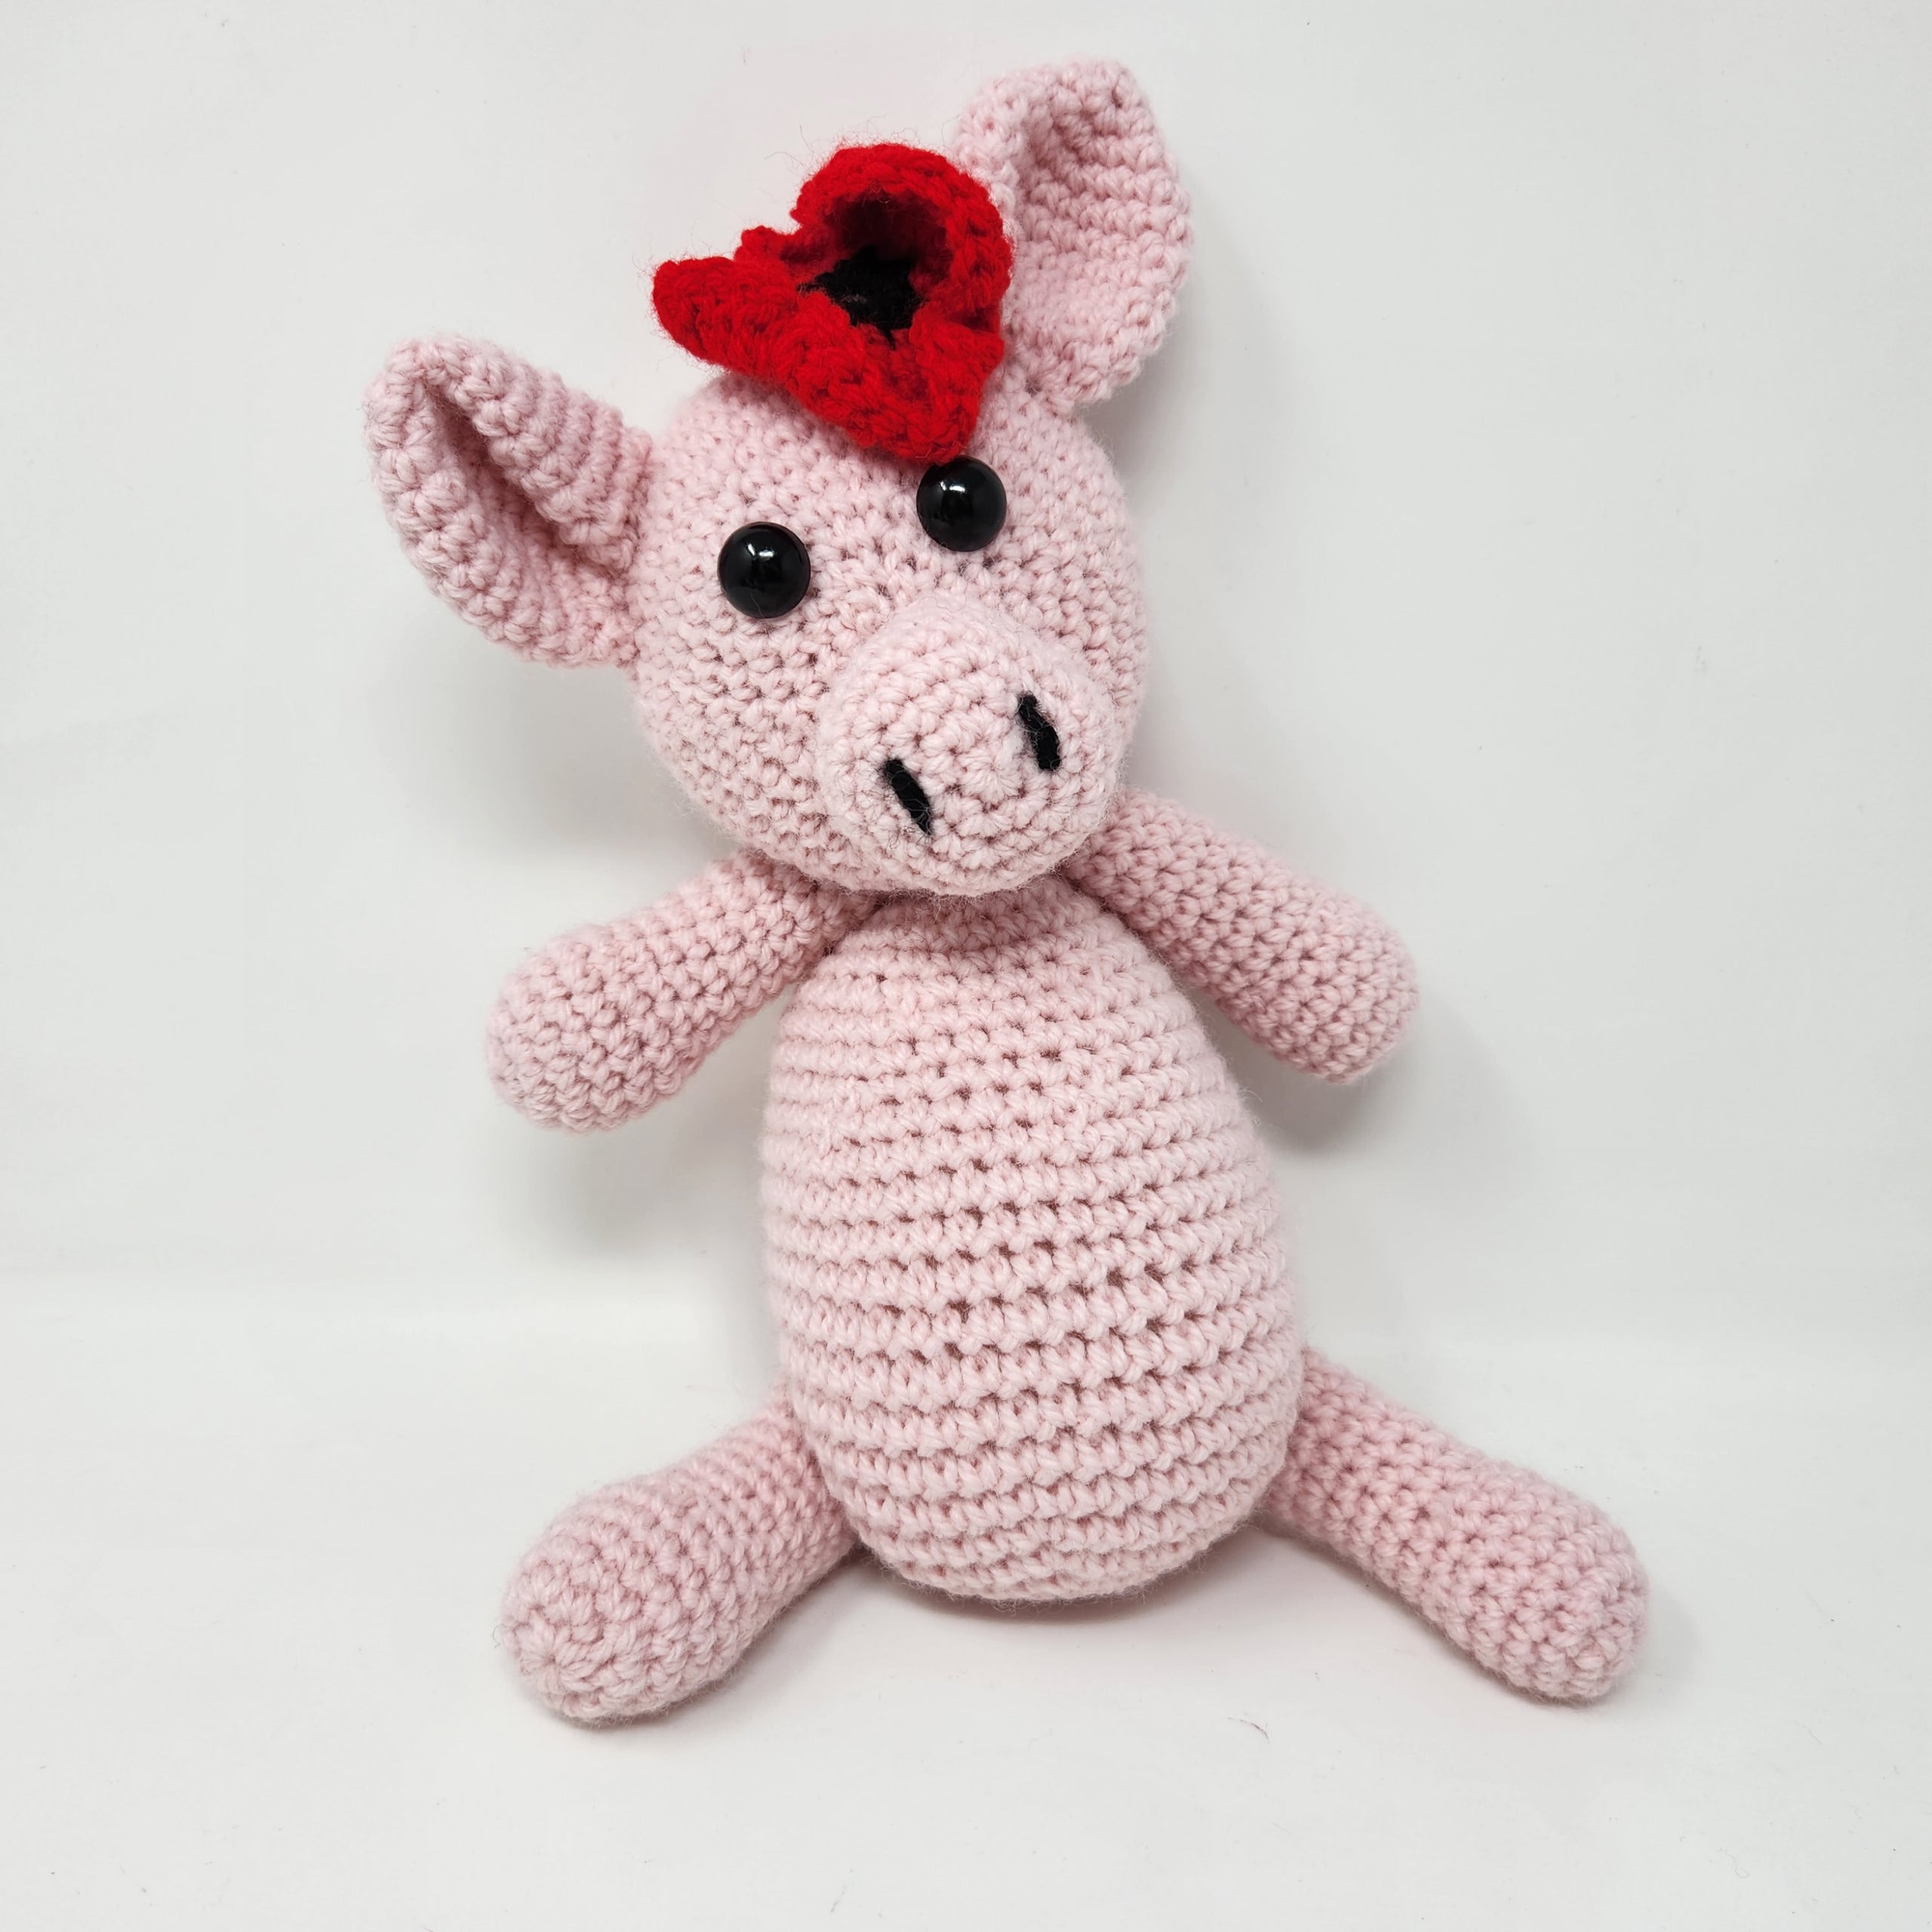 Poppy the Pig - Crochet Amigurumi Kit